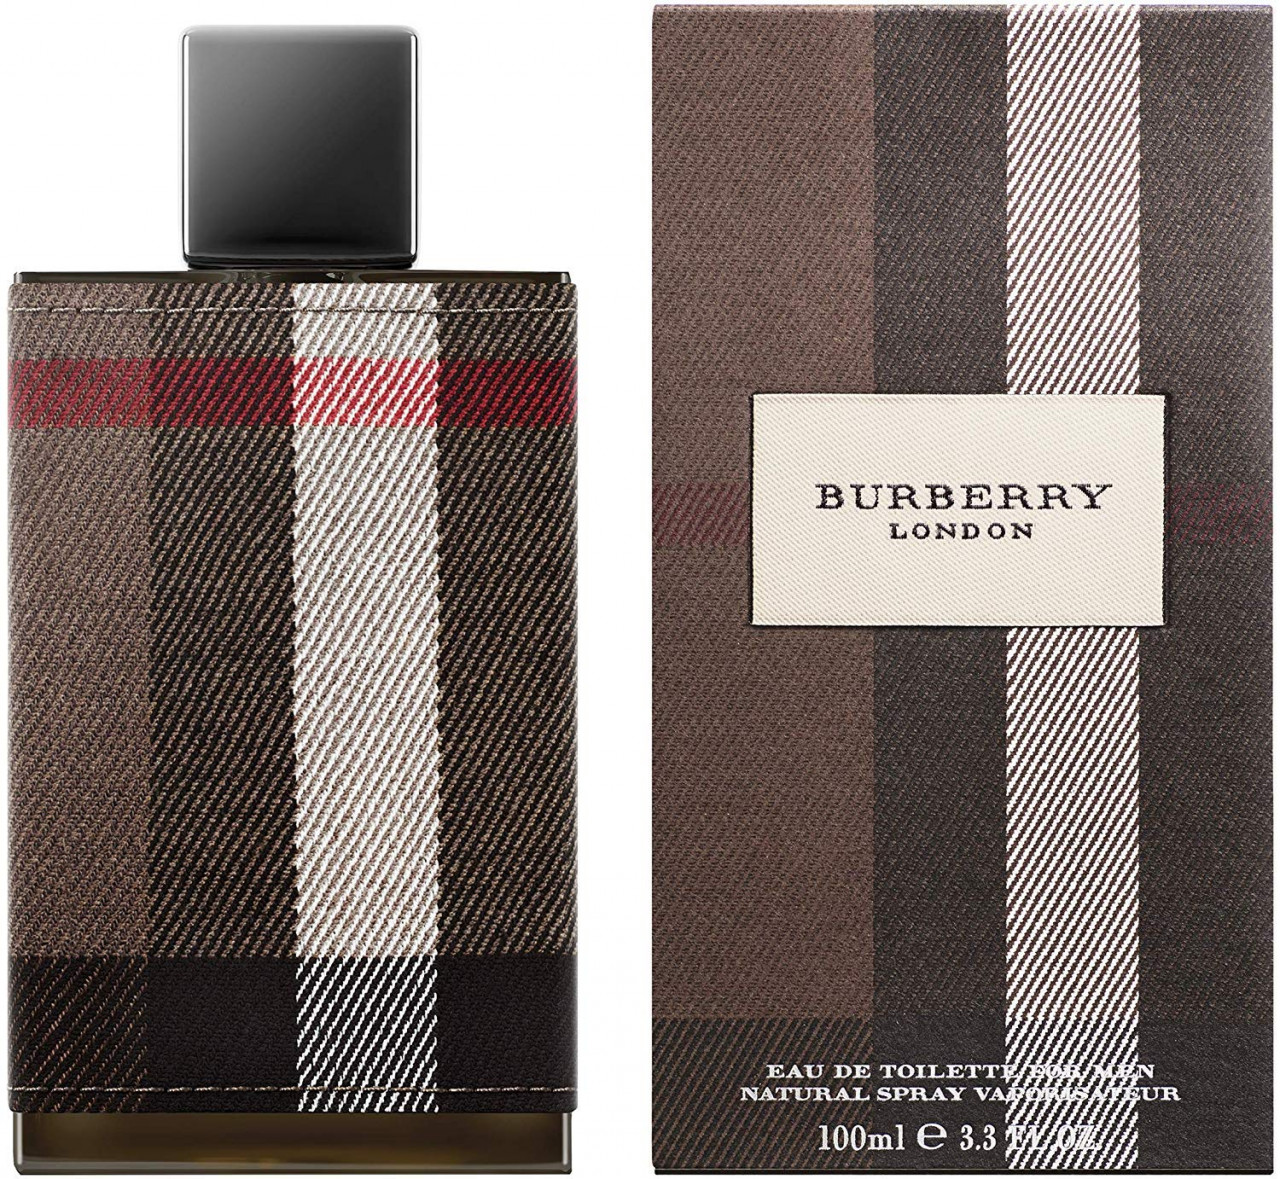 Burberry London Perfume For Men Eau de Toilette Price in Pakistan